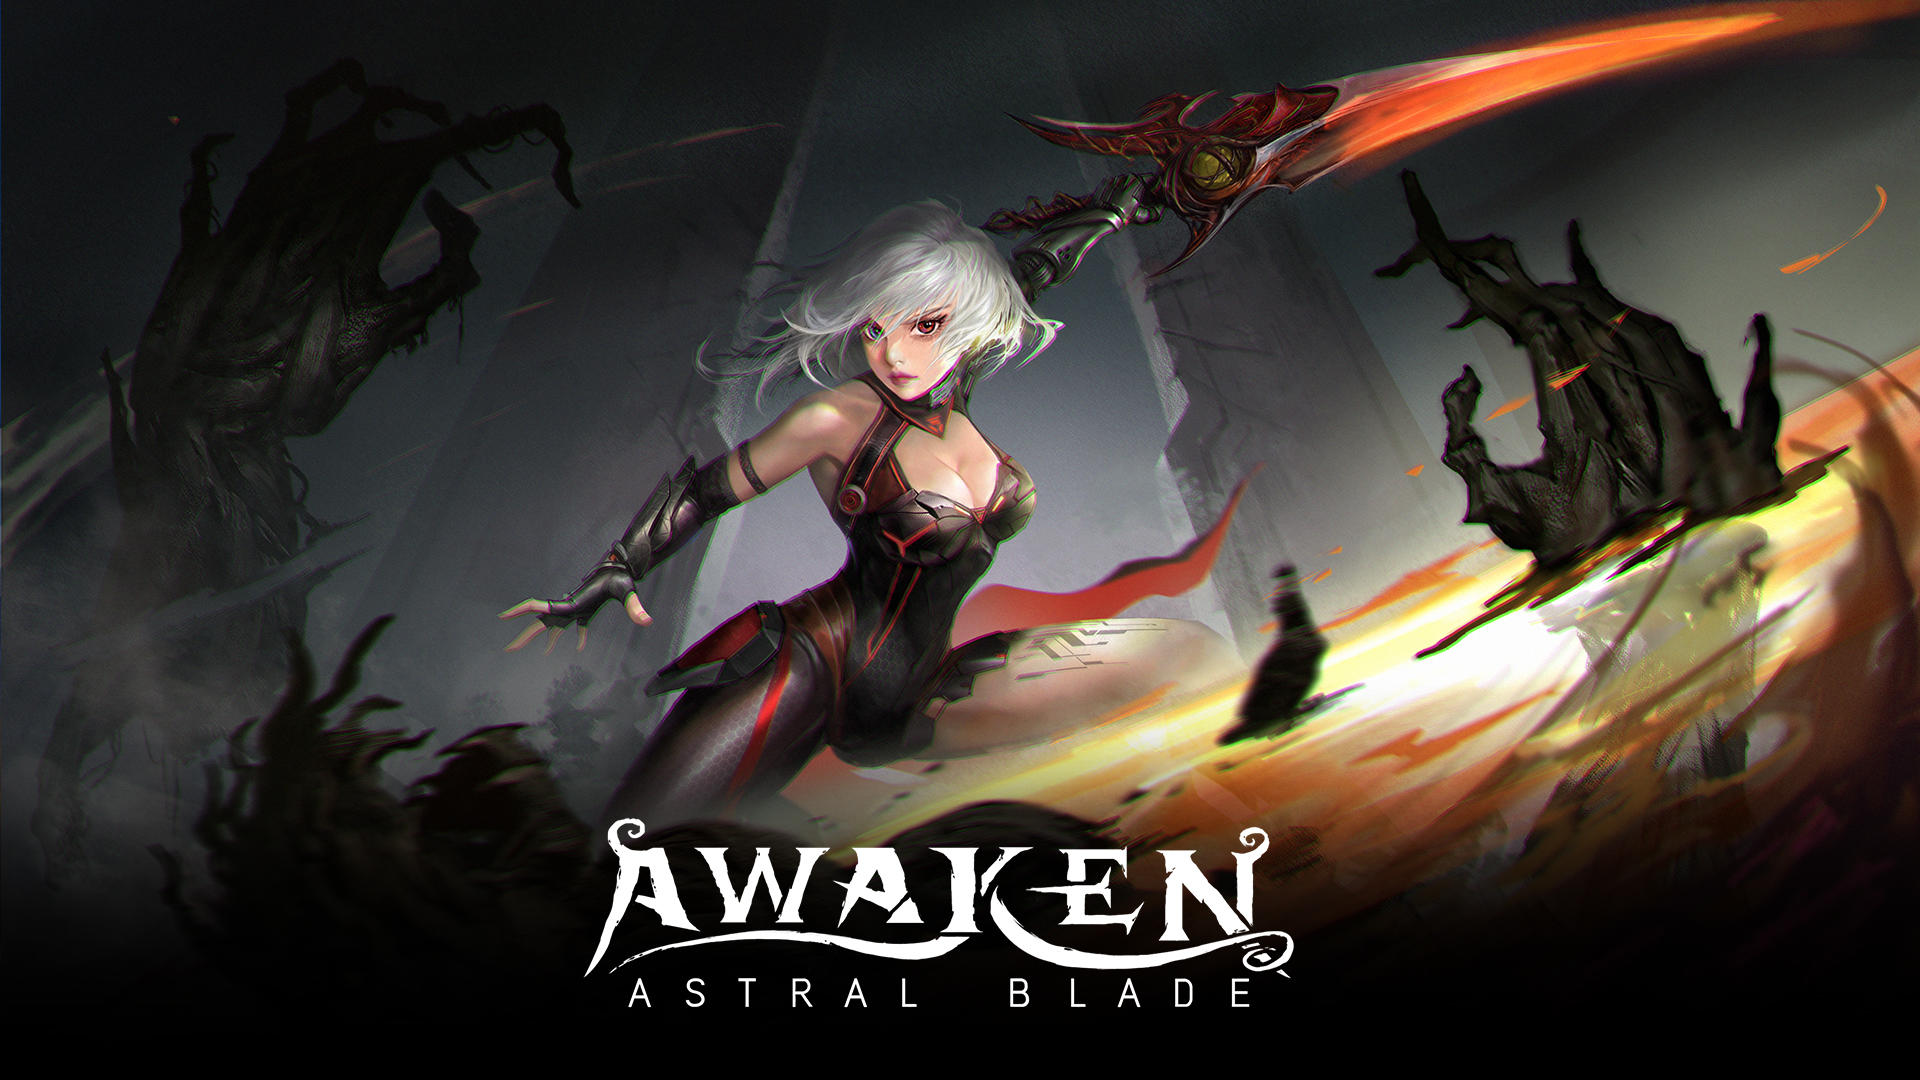 Banner of ตื่นขึ้น - Astral blade 